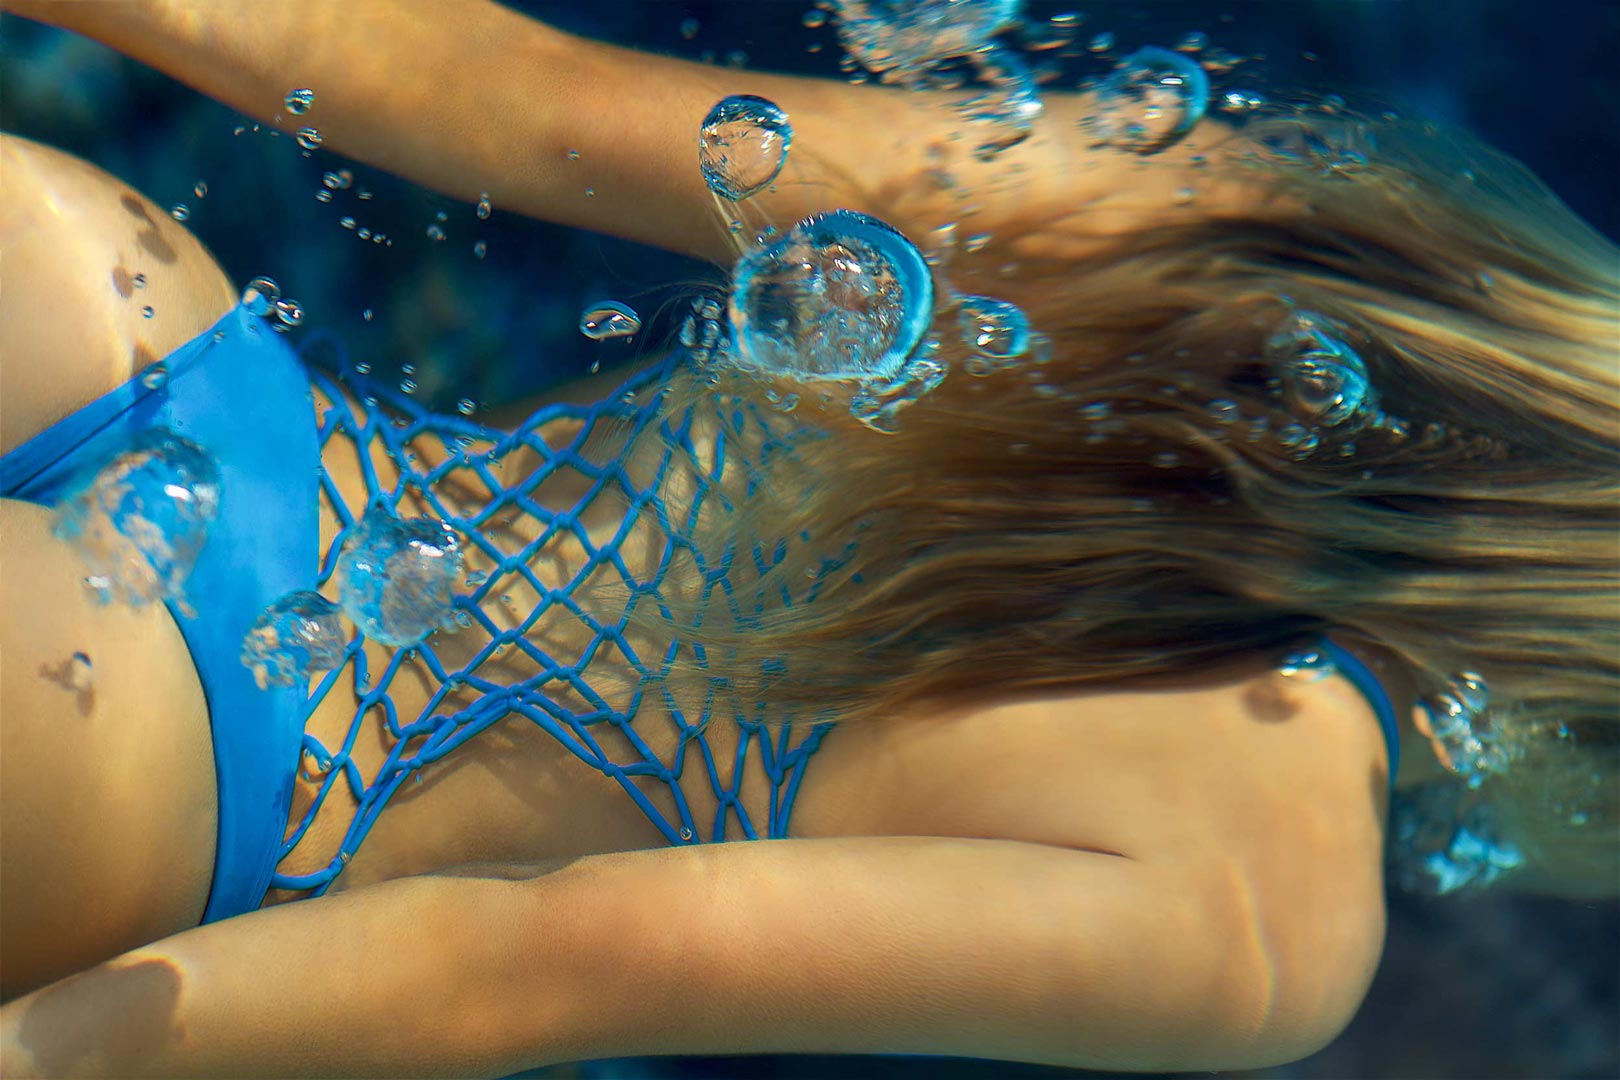  FITNESS &amp; ACTIVE SWIMWEAR Underwater bubbles with Jayde 'Stella' Heath in Mikoh 